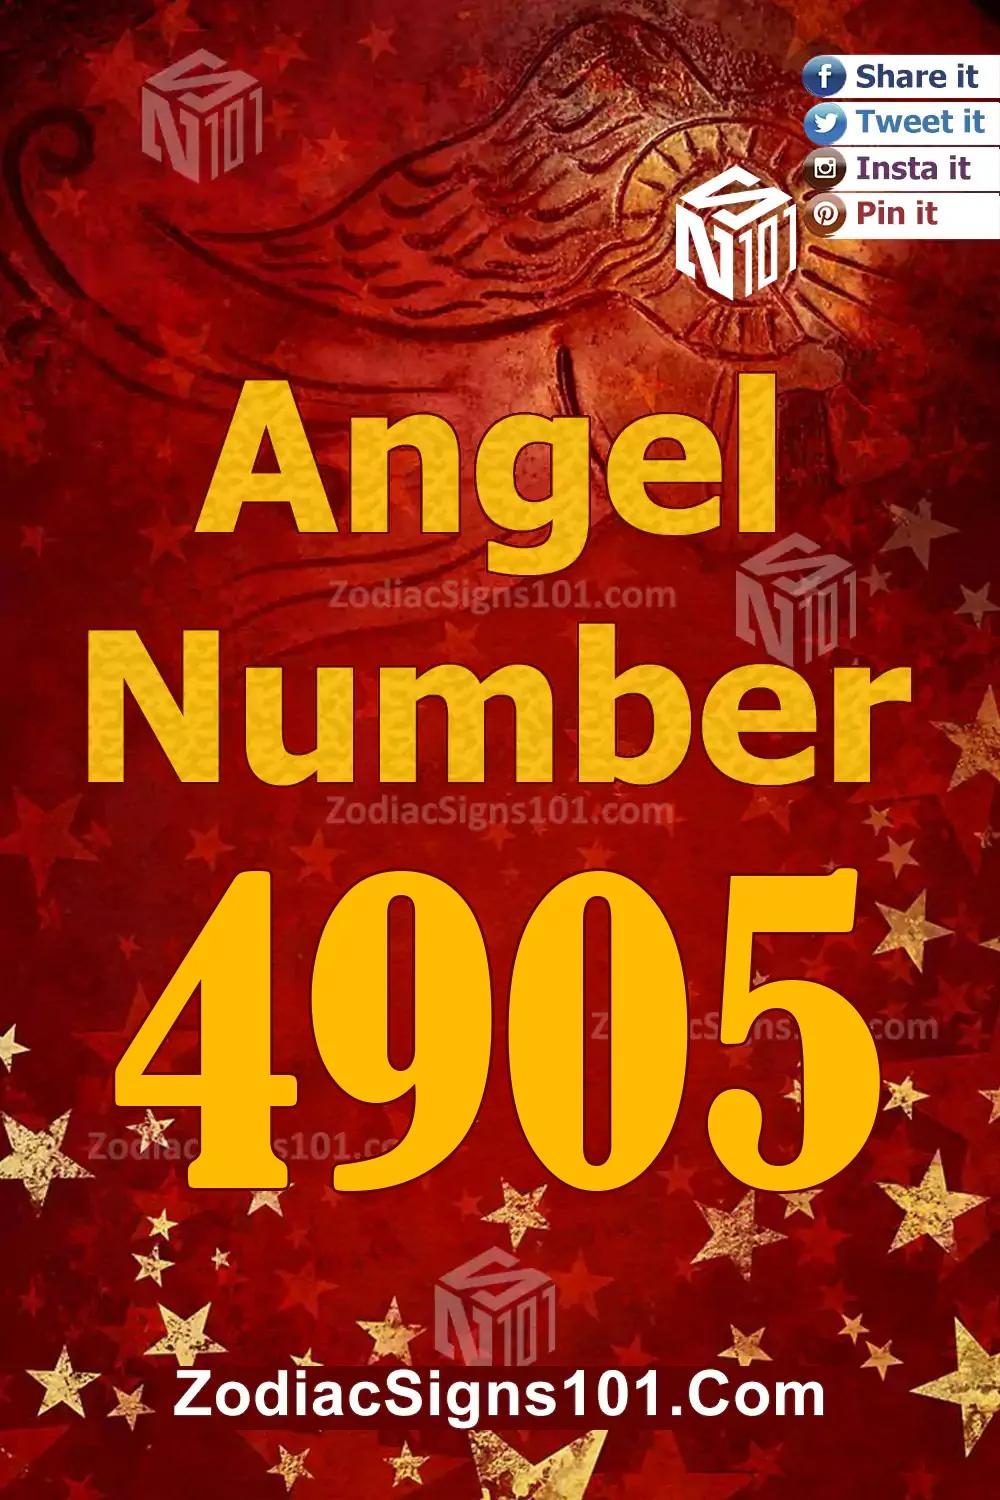 4905-Angel-Number-Meaning.jpg